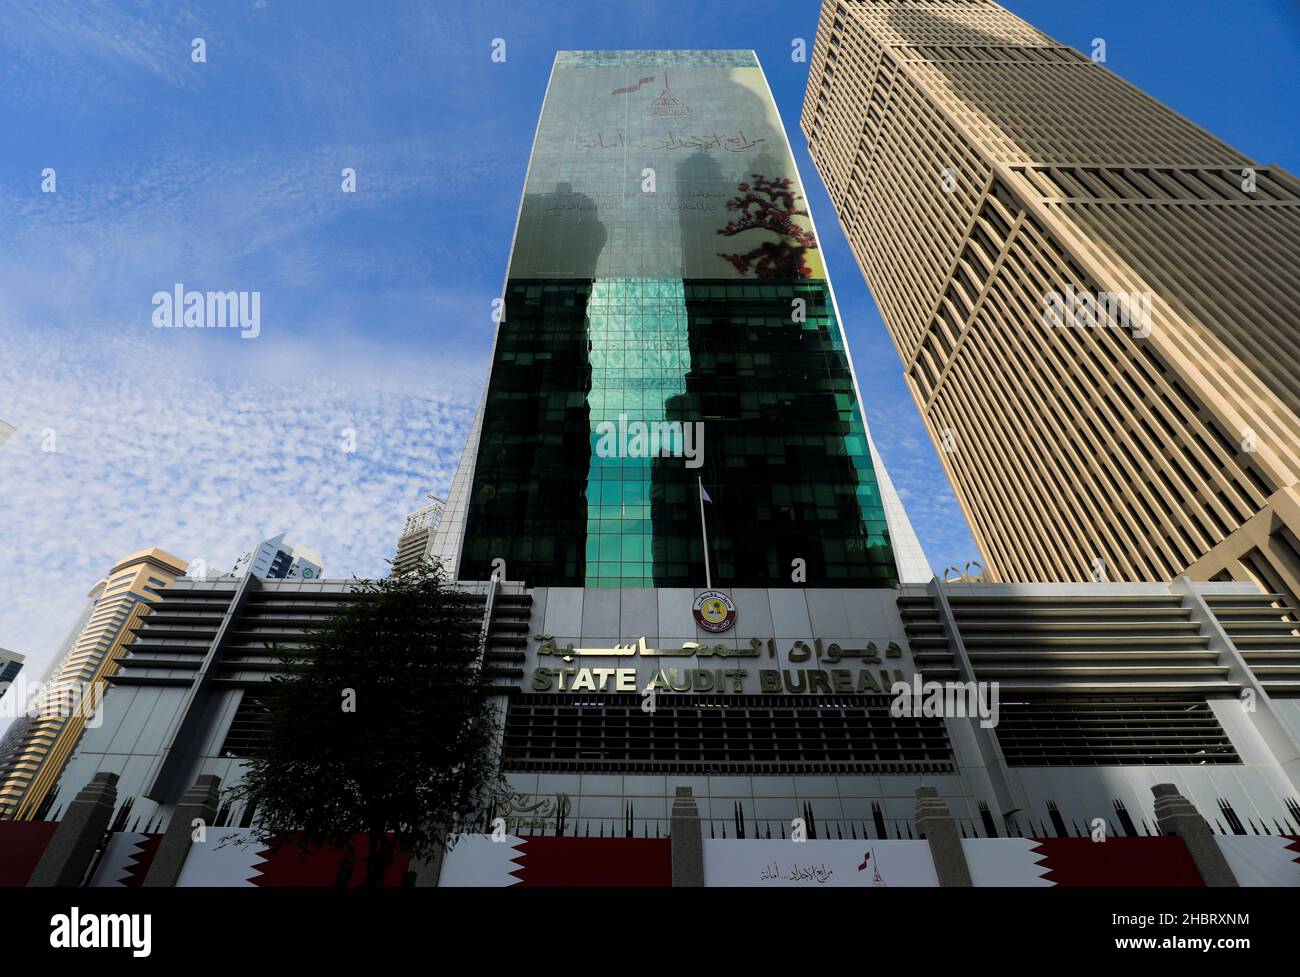 Verschrikking Nietje Meestal A view of the "State Audit Bureau" is seen next to skyscrapers in Doha,  Qatar December 21, 2021. REUTERS/Amr Abdallah Dalsh Stock Photo - Alamy